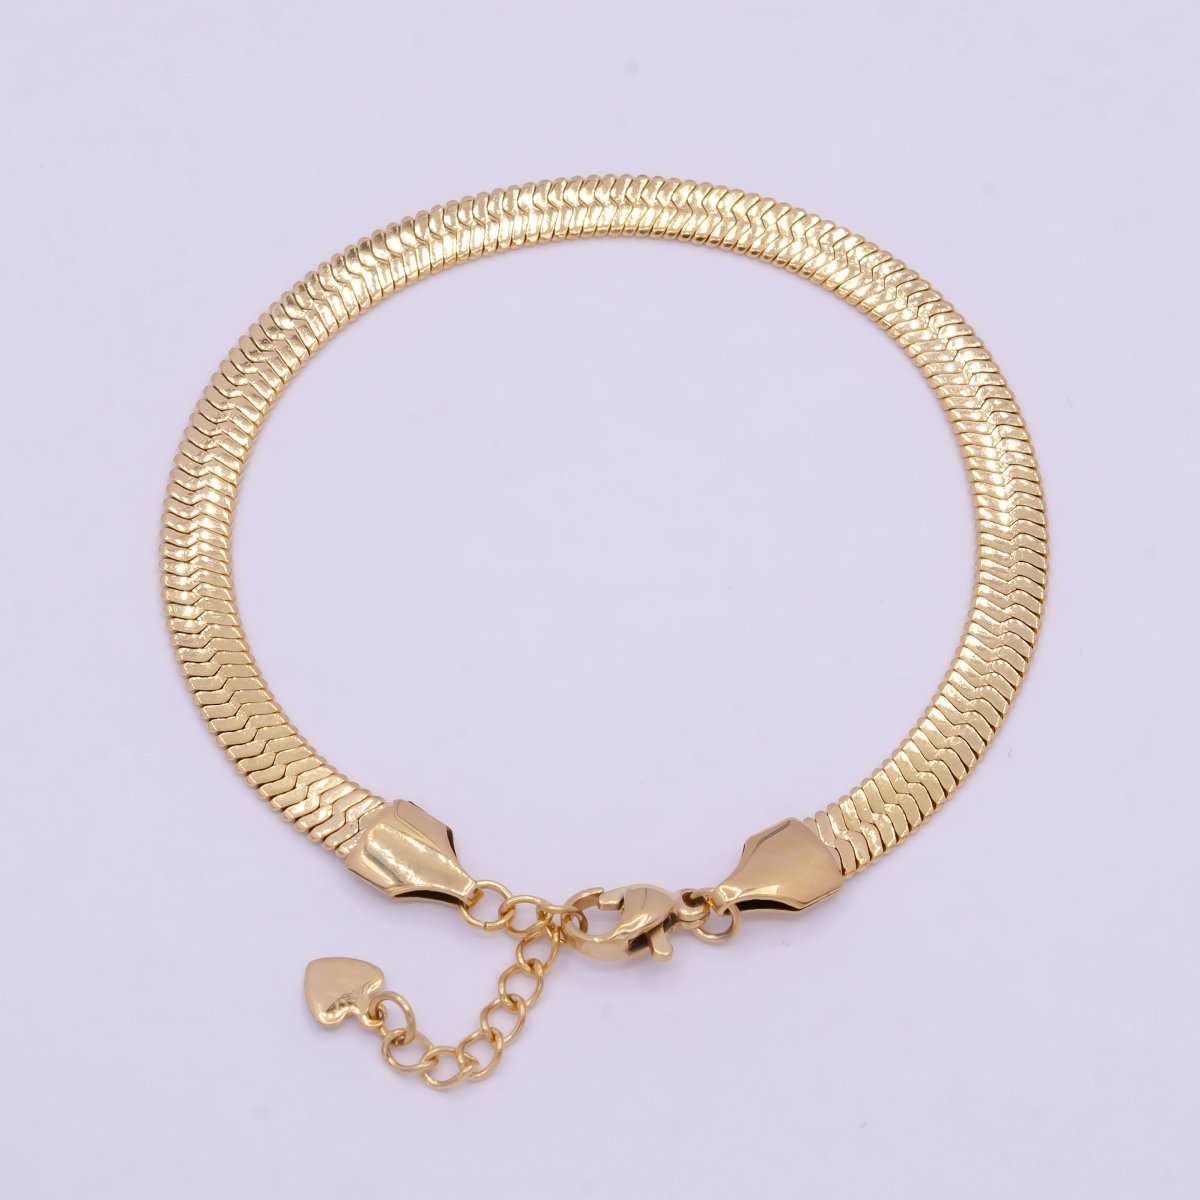 24K Gold Filled 3mm, 4mm, 5mm Herringbone Chain 7 Inch Bracelet | WA-928 WA-929 WA-927 Clearance Pricing - DLUXCA